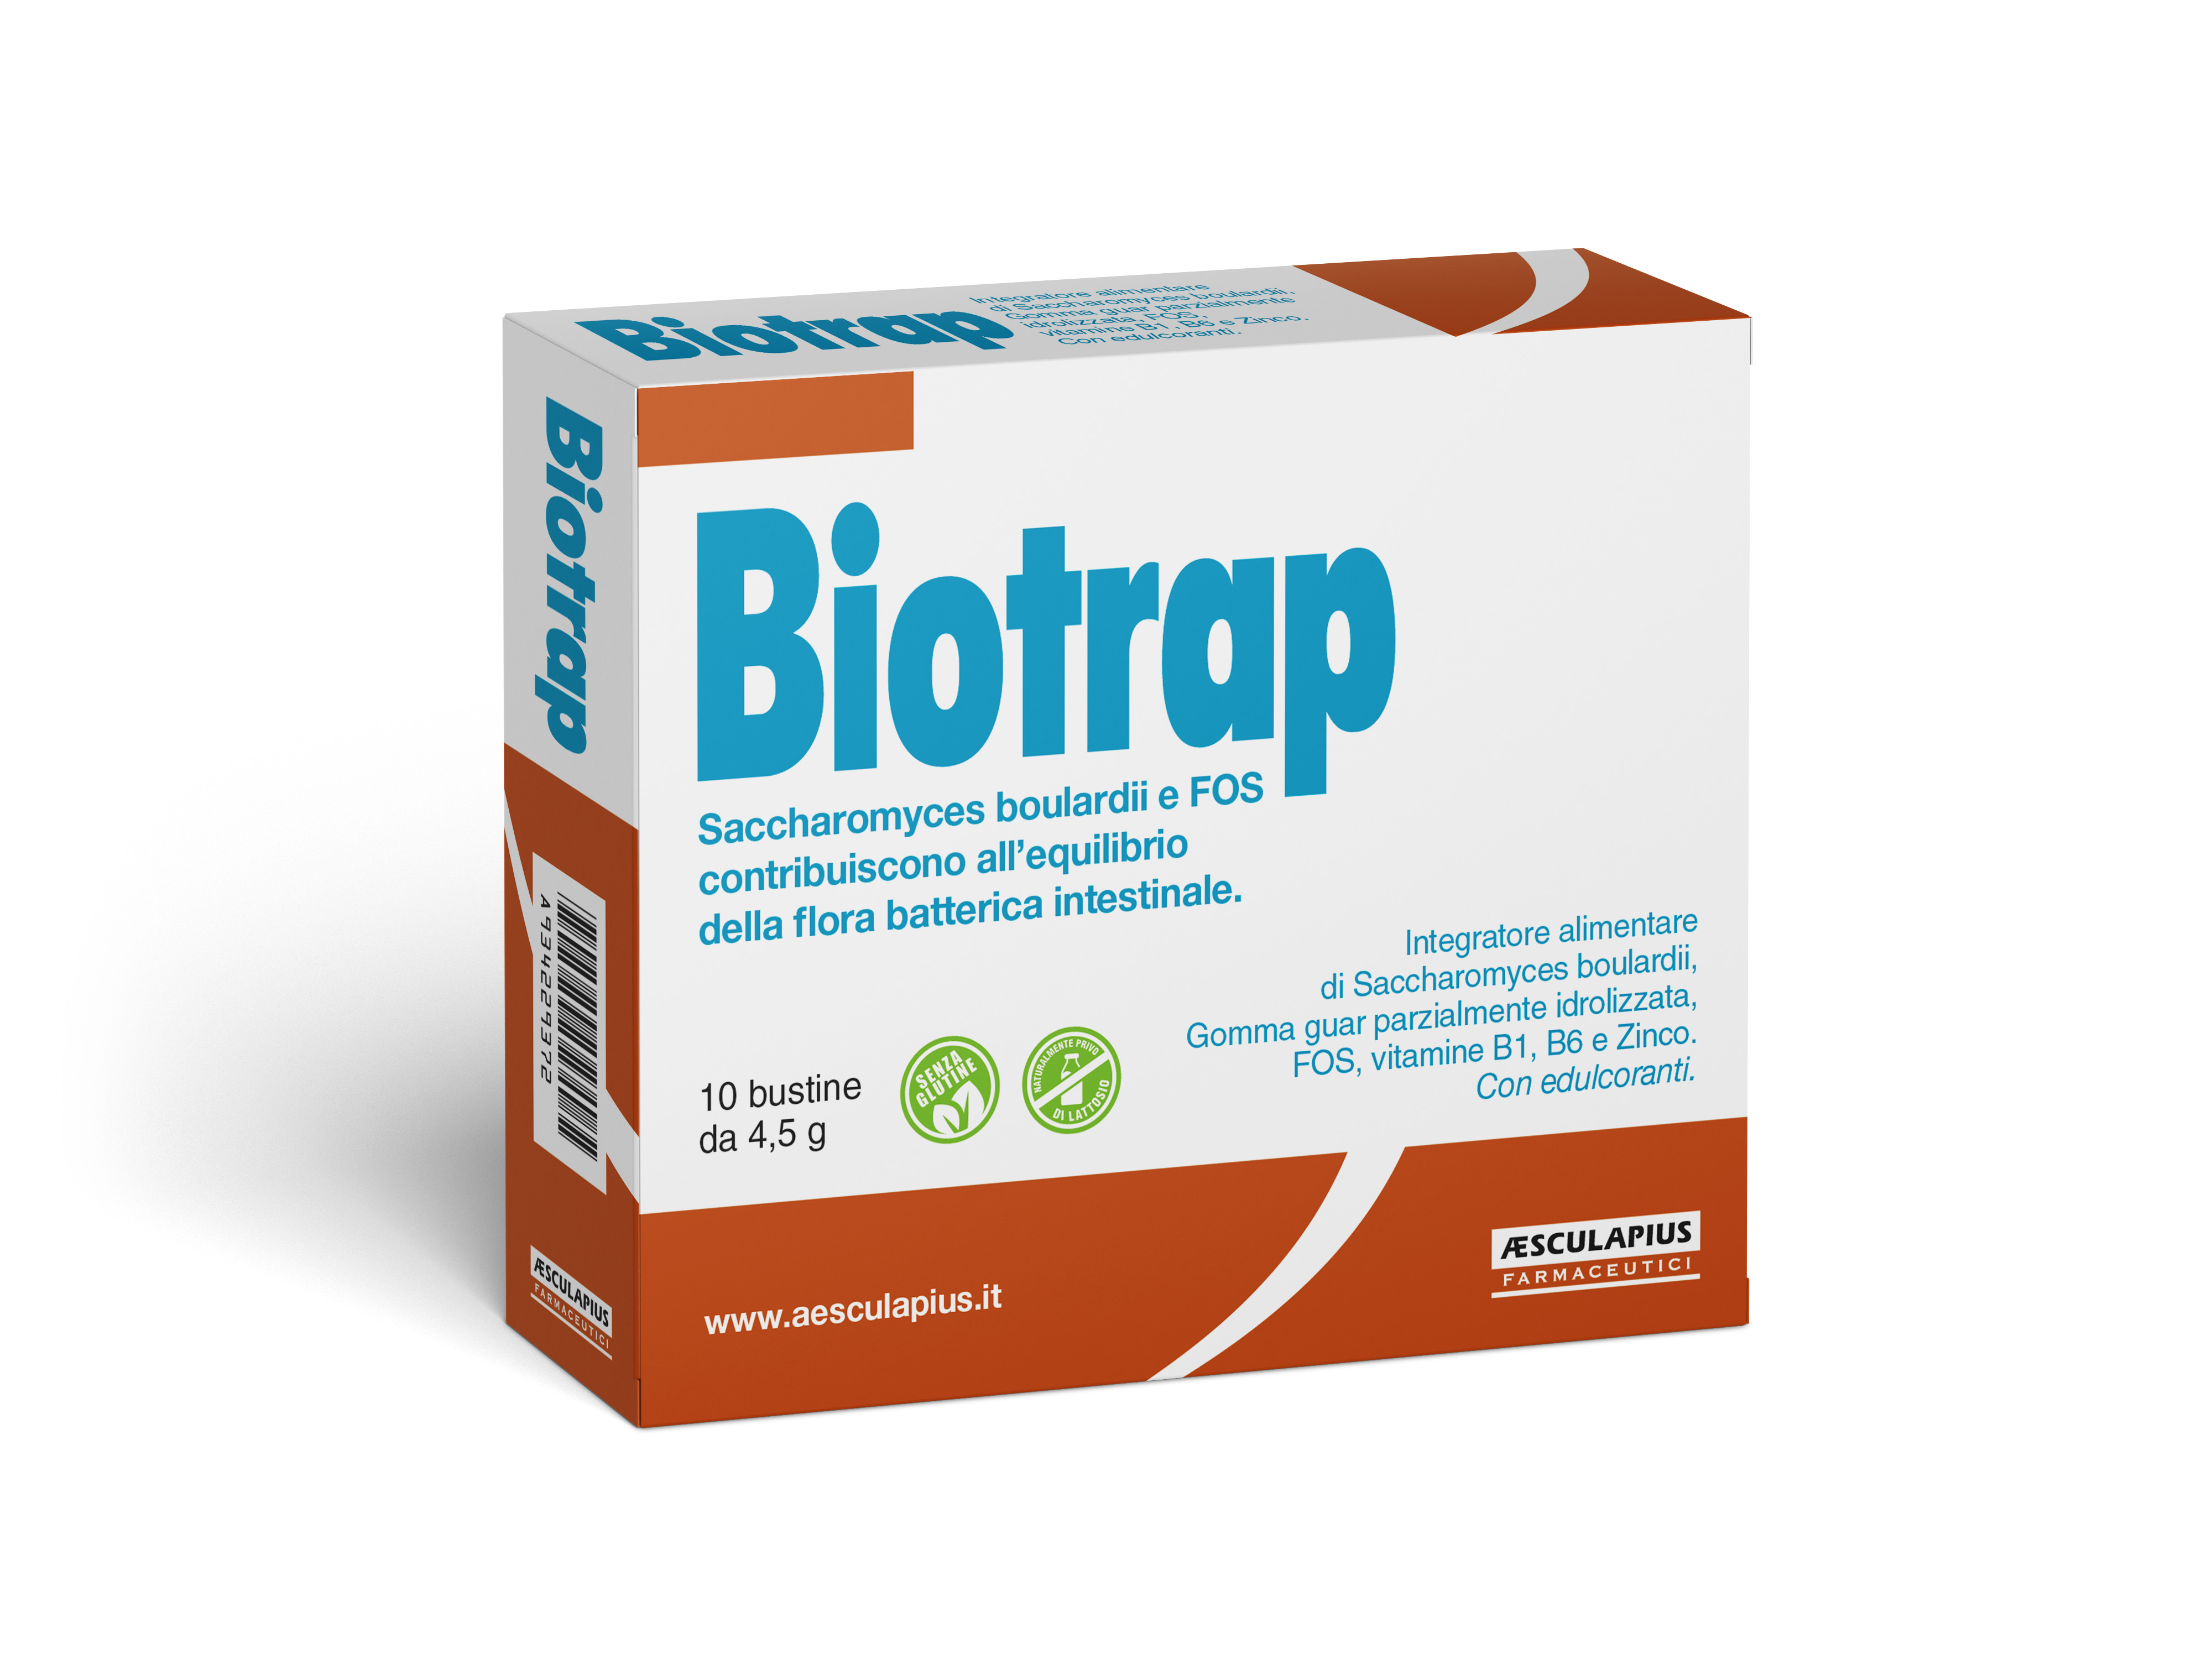 Biotrap